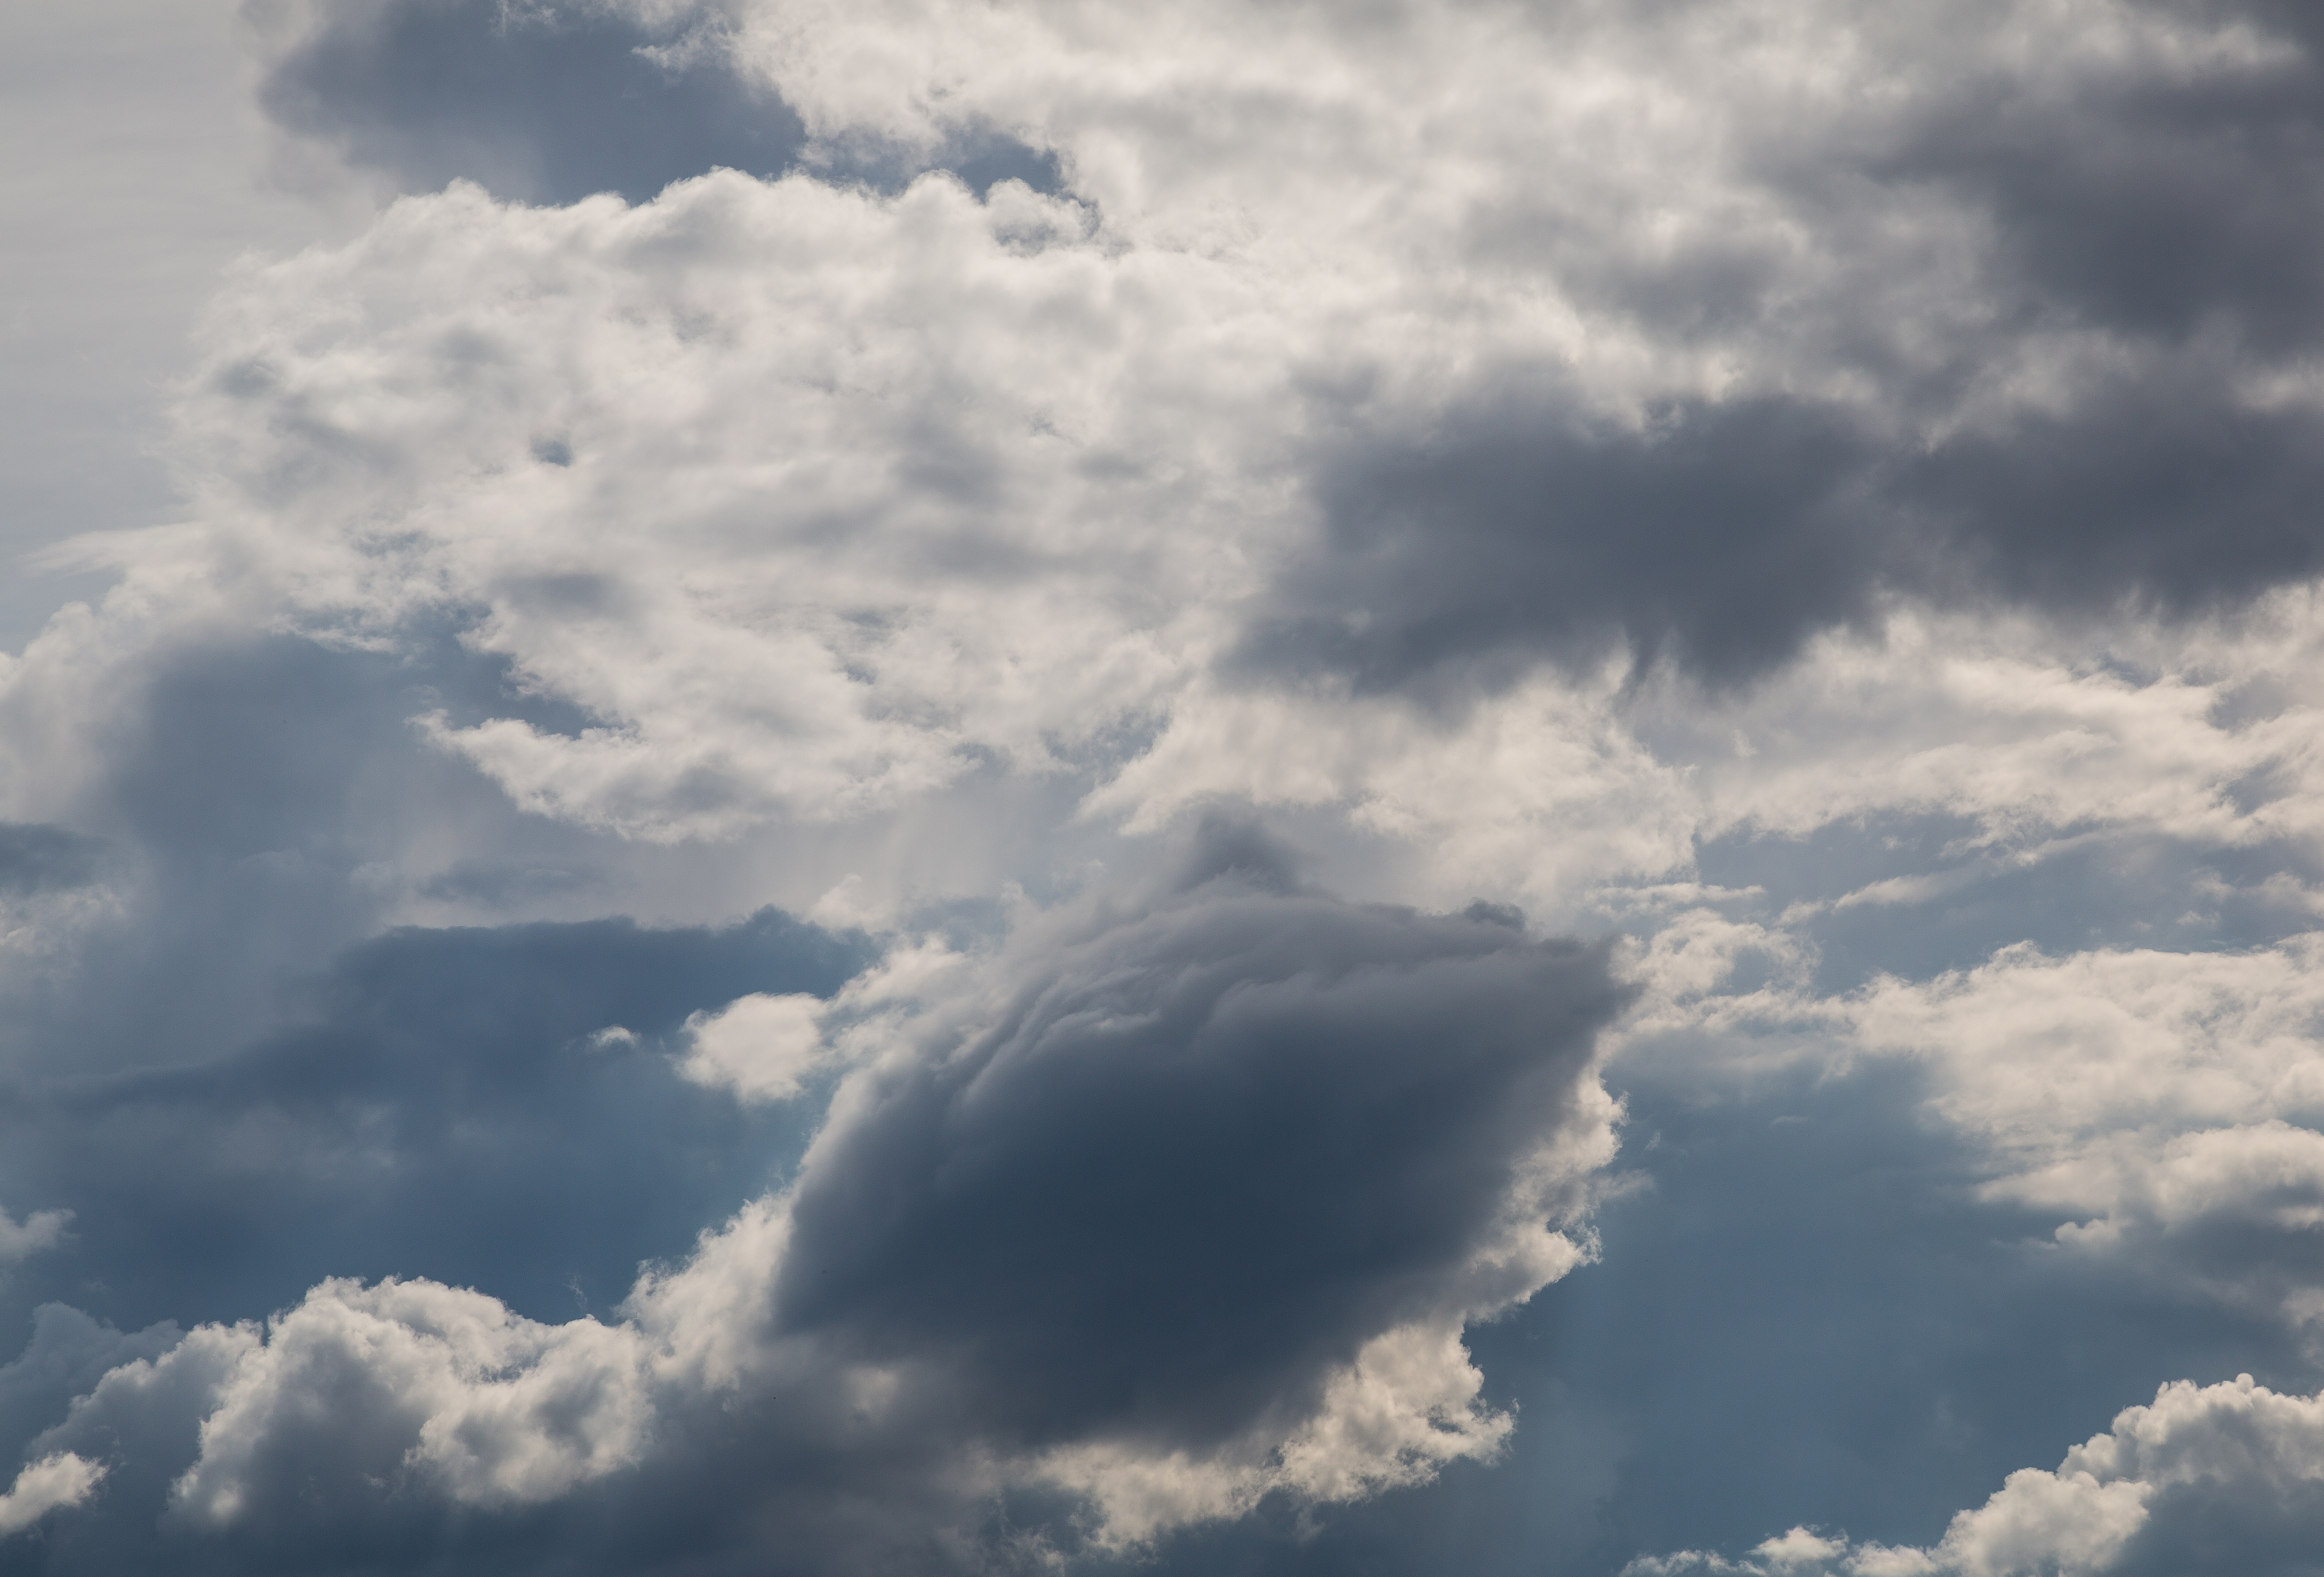 File:Cloudy Sky (19741406142).jpg - Wikimedia Commons